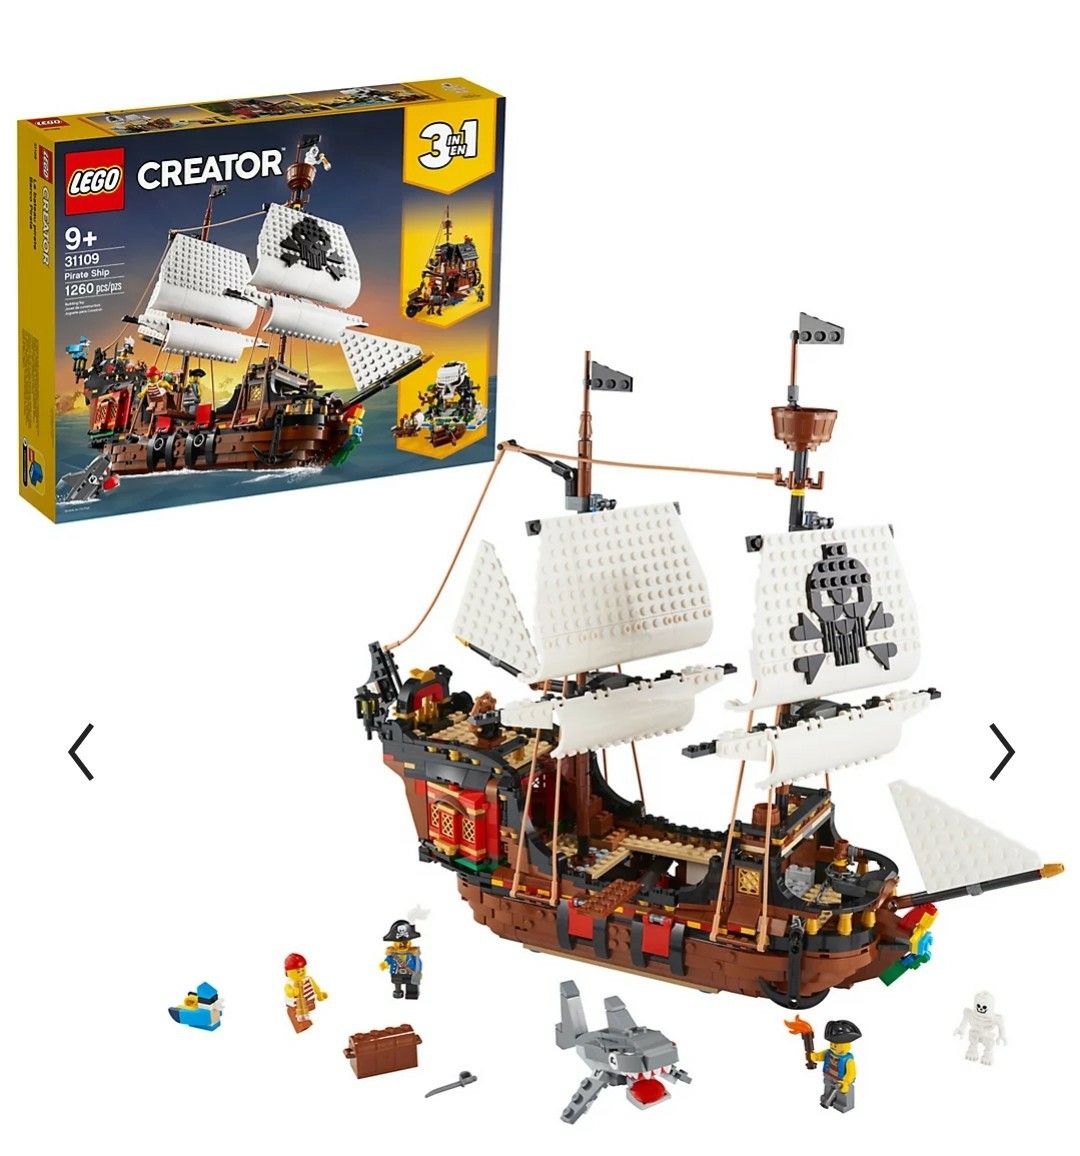 LEGO CREATORS 3 IN 1 PIRATE SHIP.